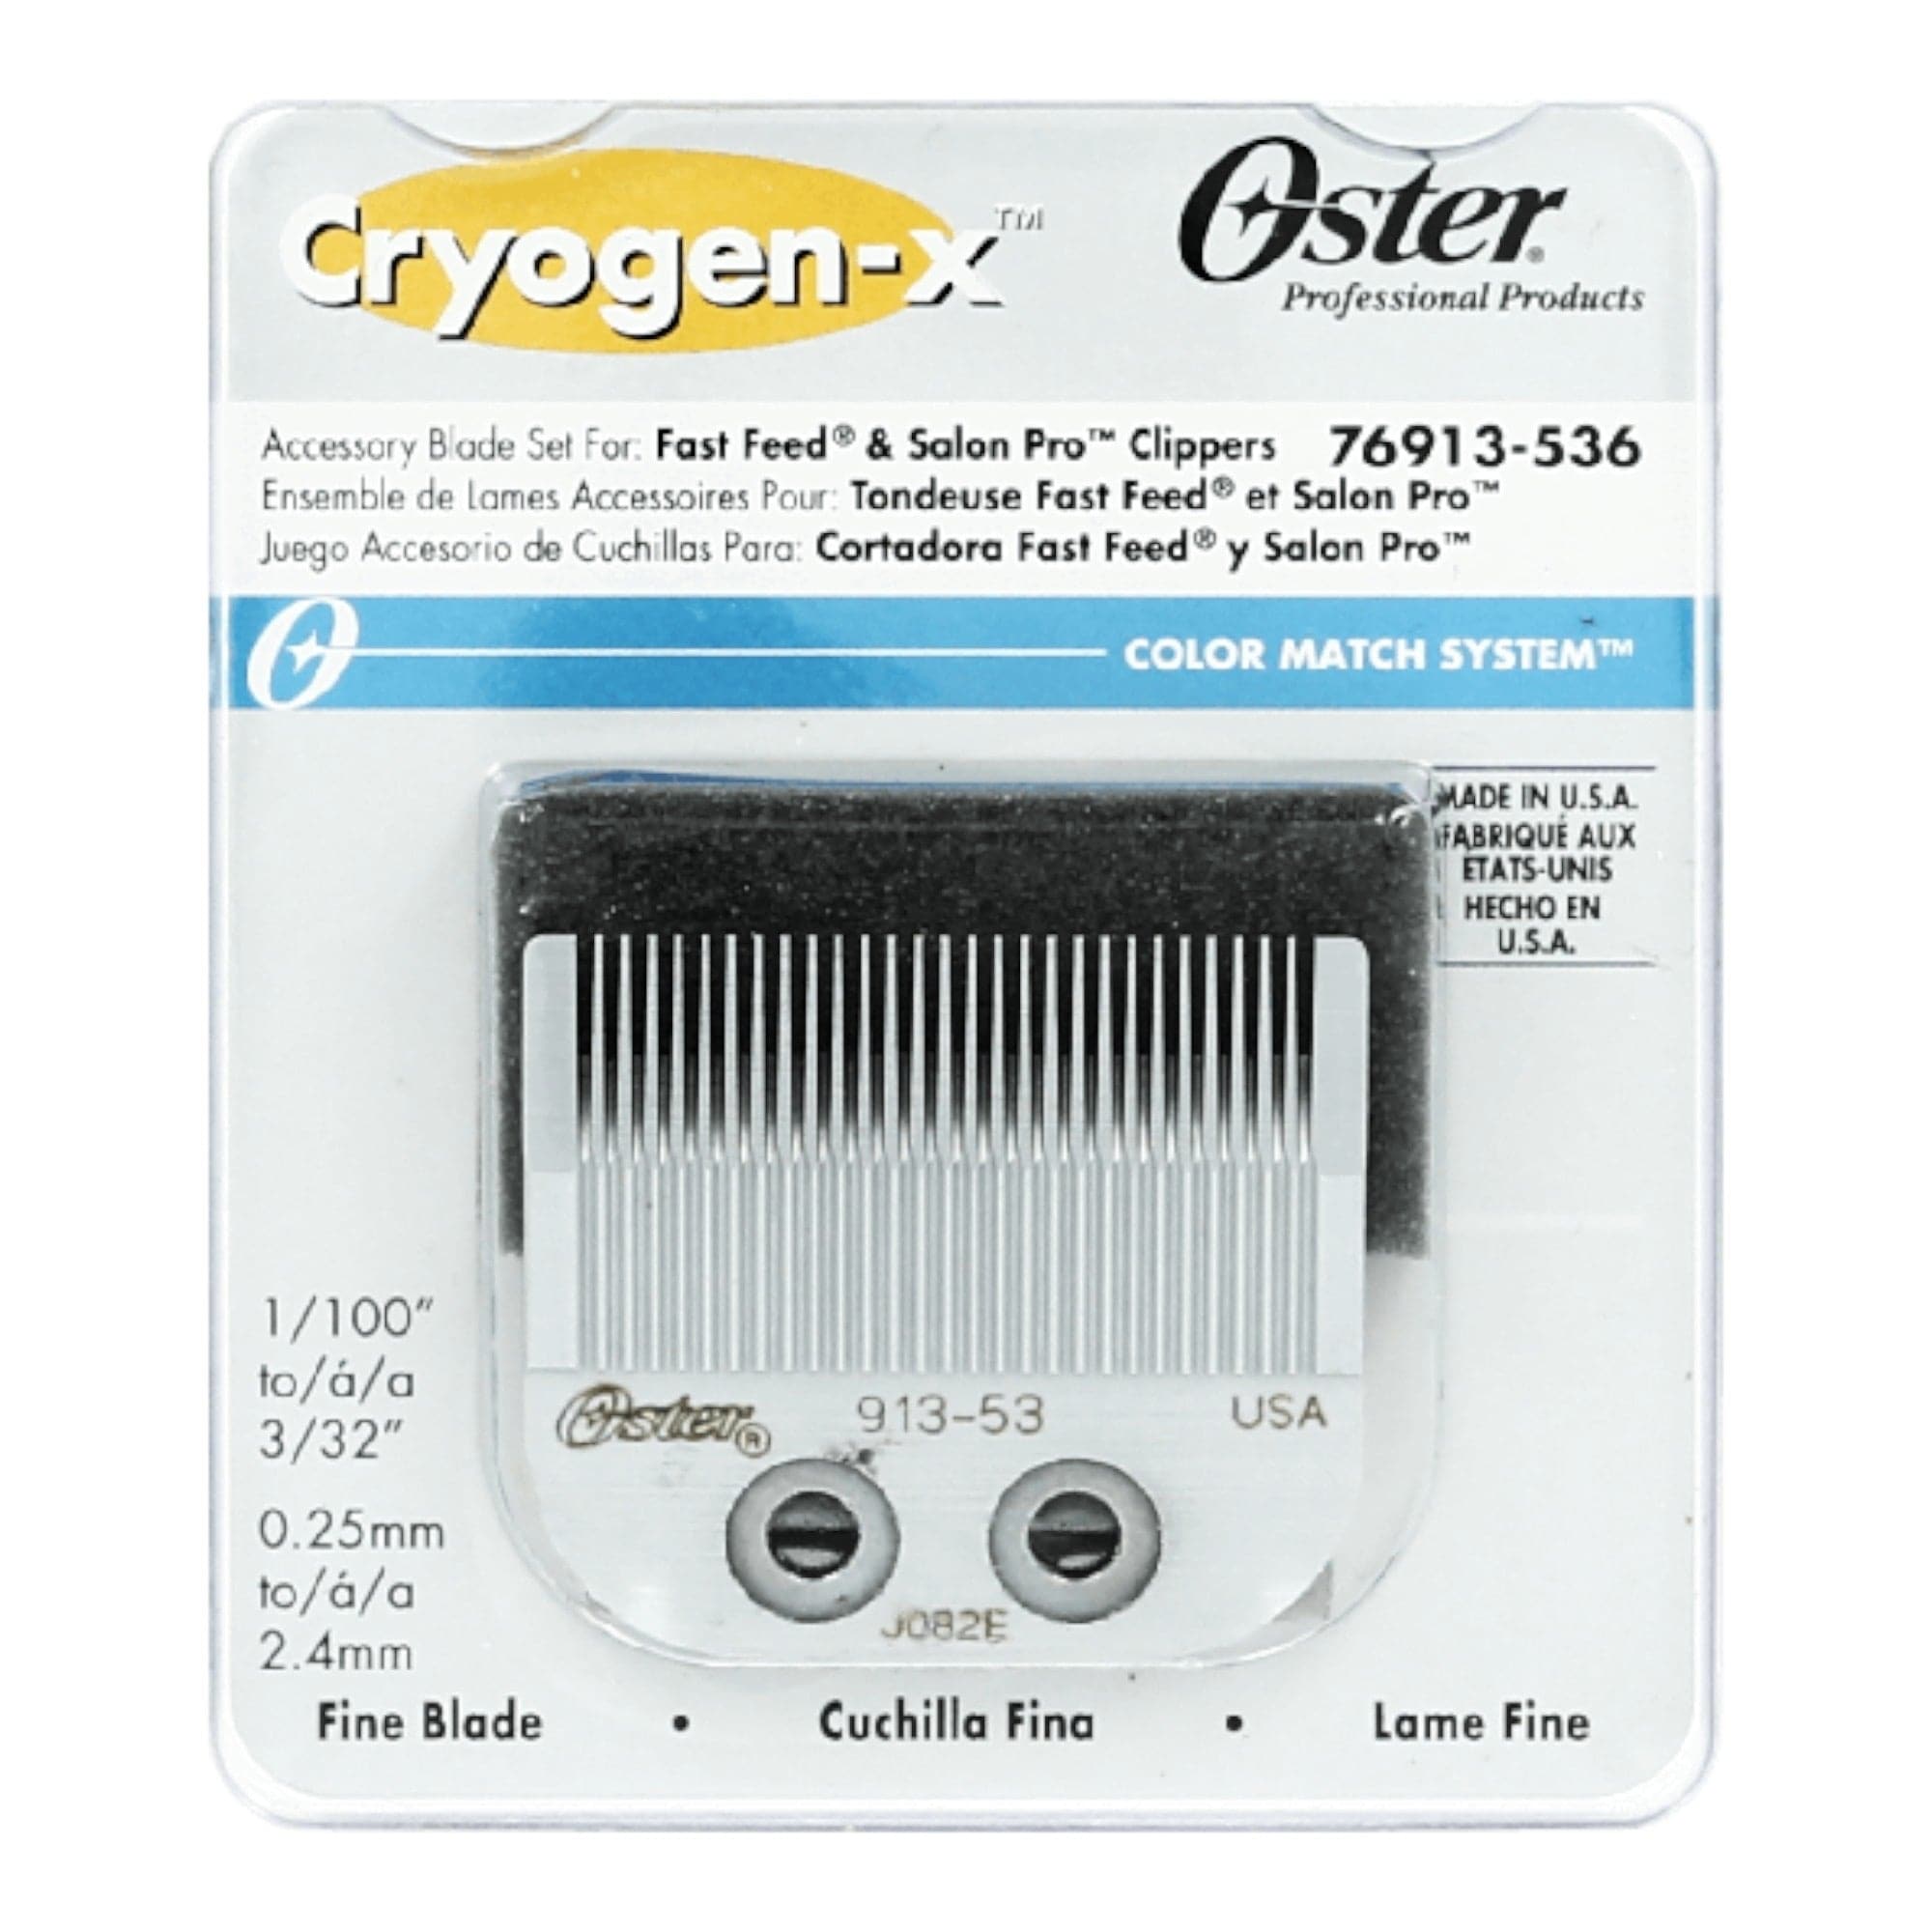 Oster - 76913-536 Cryogen-x Fine Blade 0.25mm - 2.4 mm